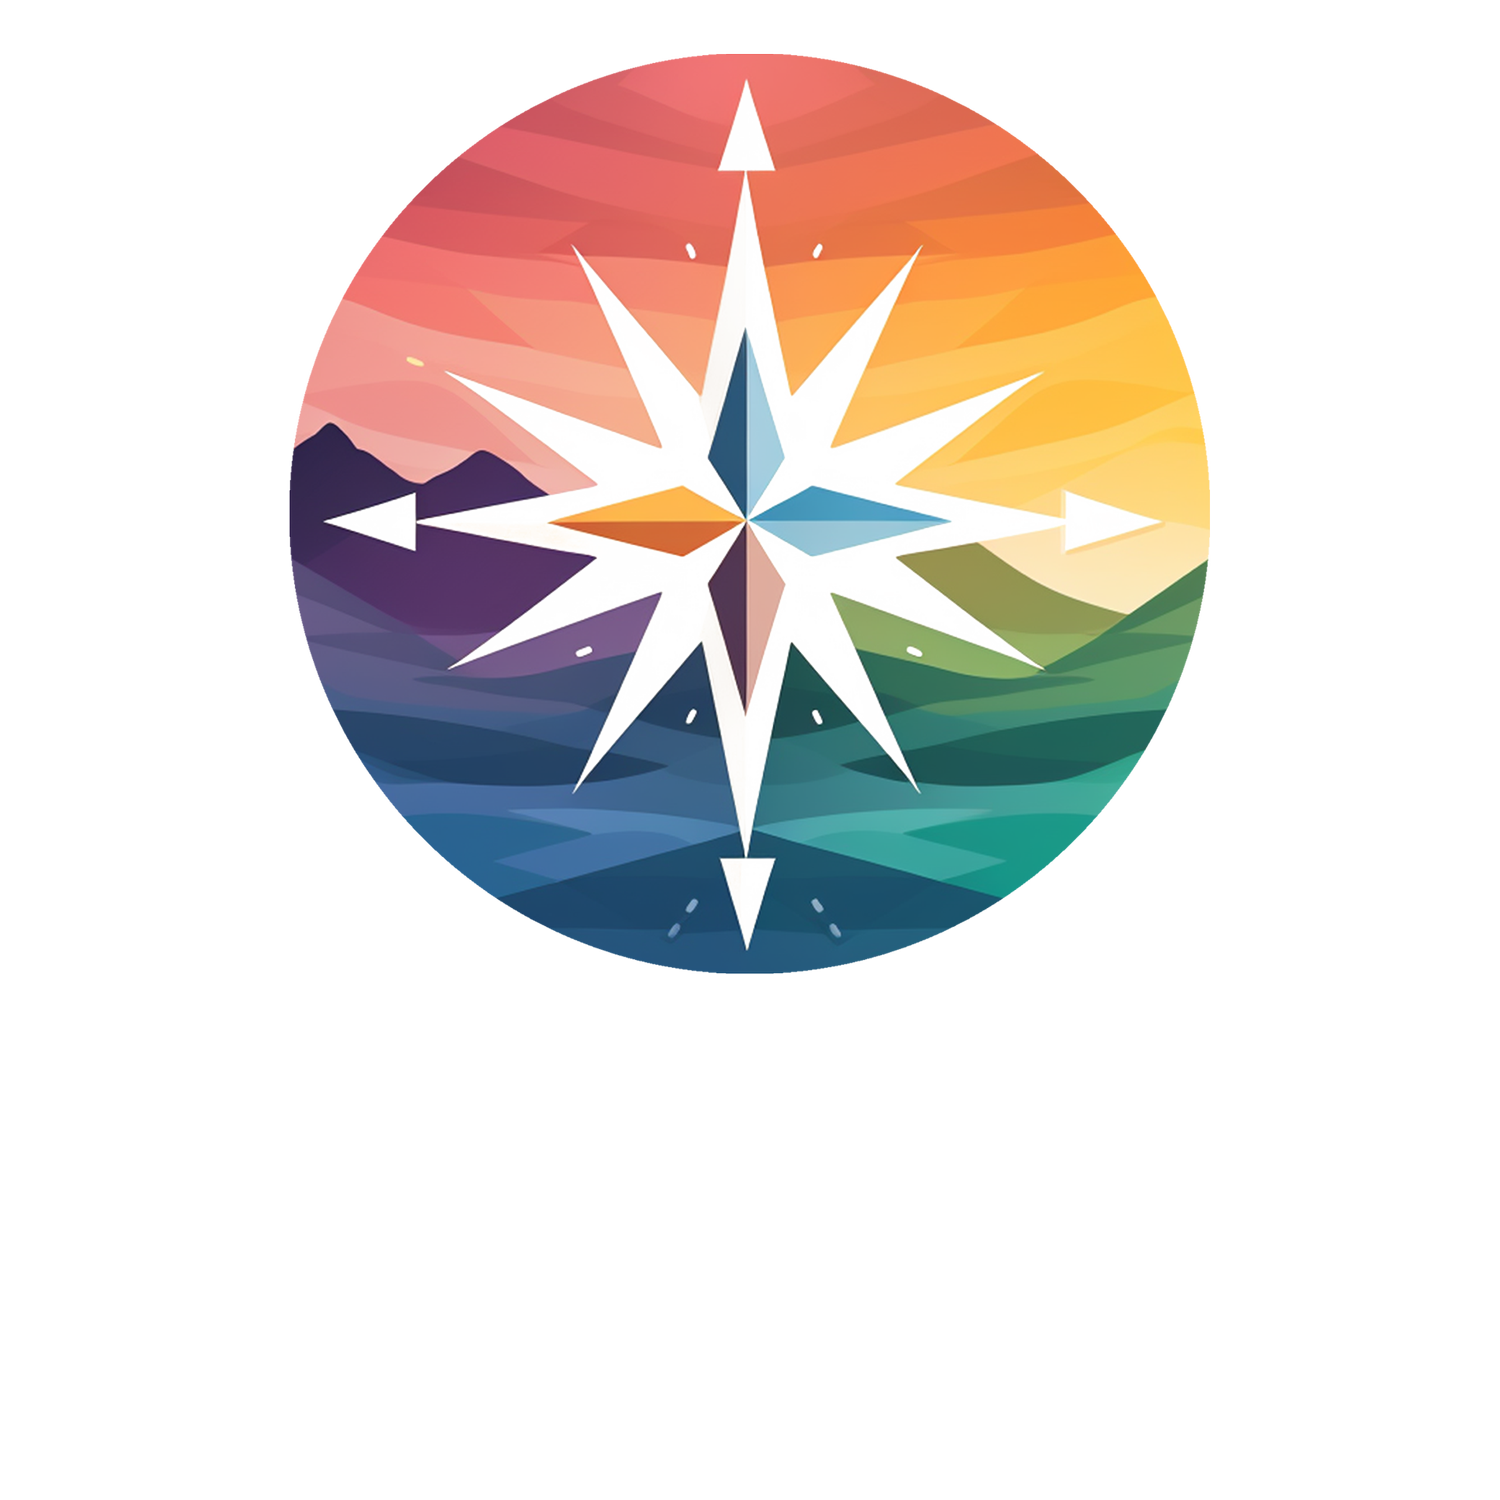 Lesbifriends Travel